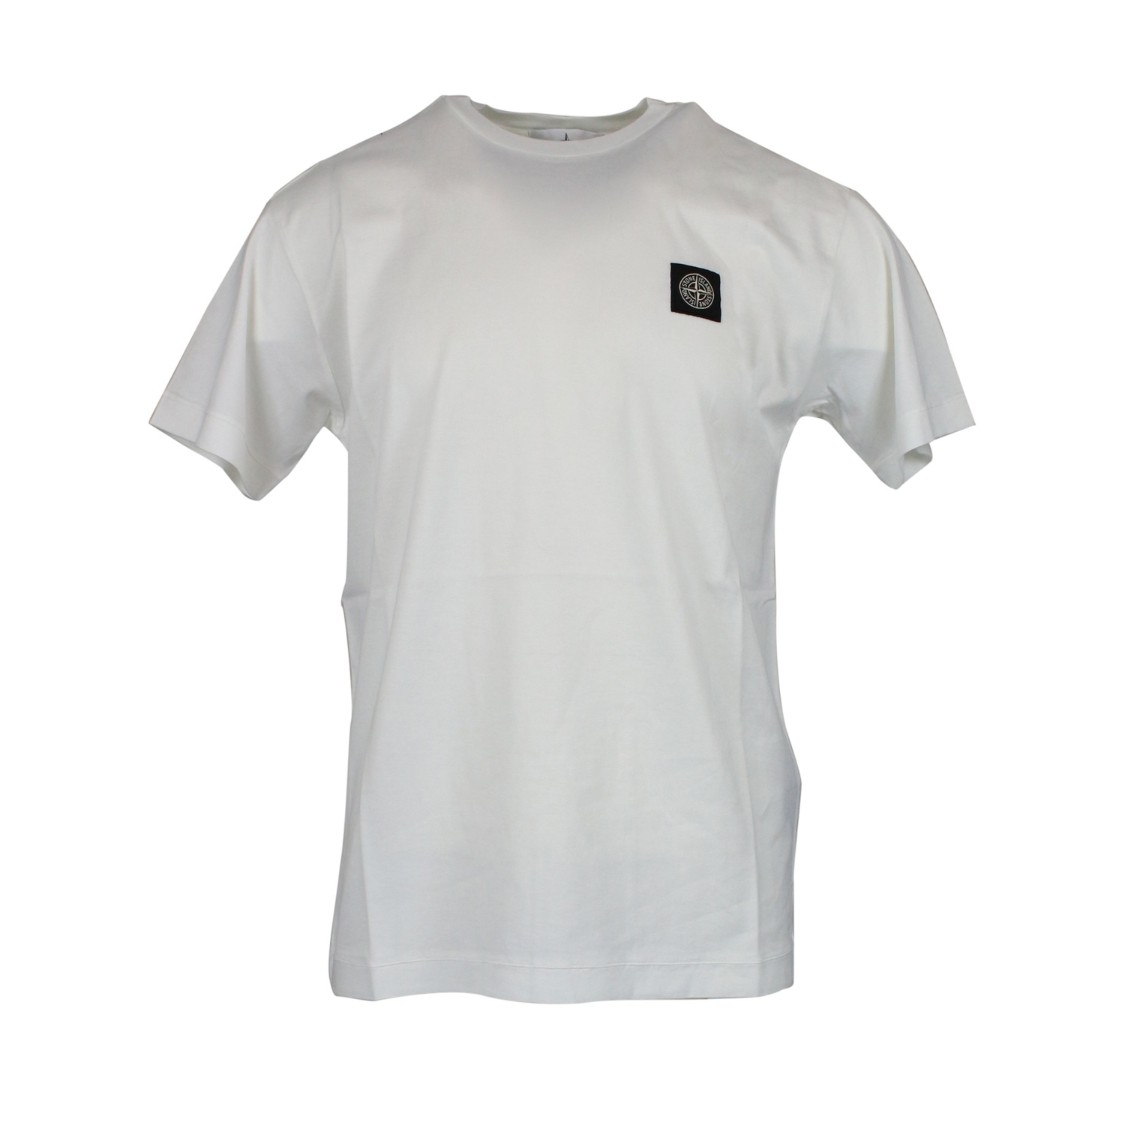 shop STONE ISLAND  T-shirt: Stone Island t-shirt mezza manica bianca.
Jersey di cotone tinto in capo .
Patch logo Stone Island sul davanti.
Regular fit.
Made in Europe.. 721 524113-V0093 number 3491068